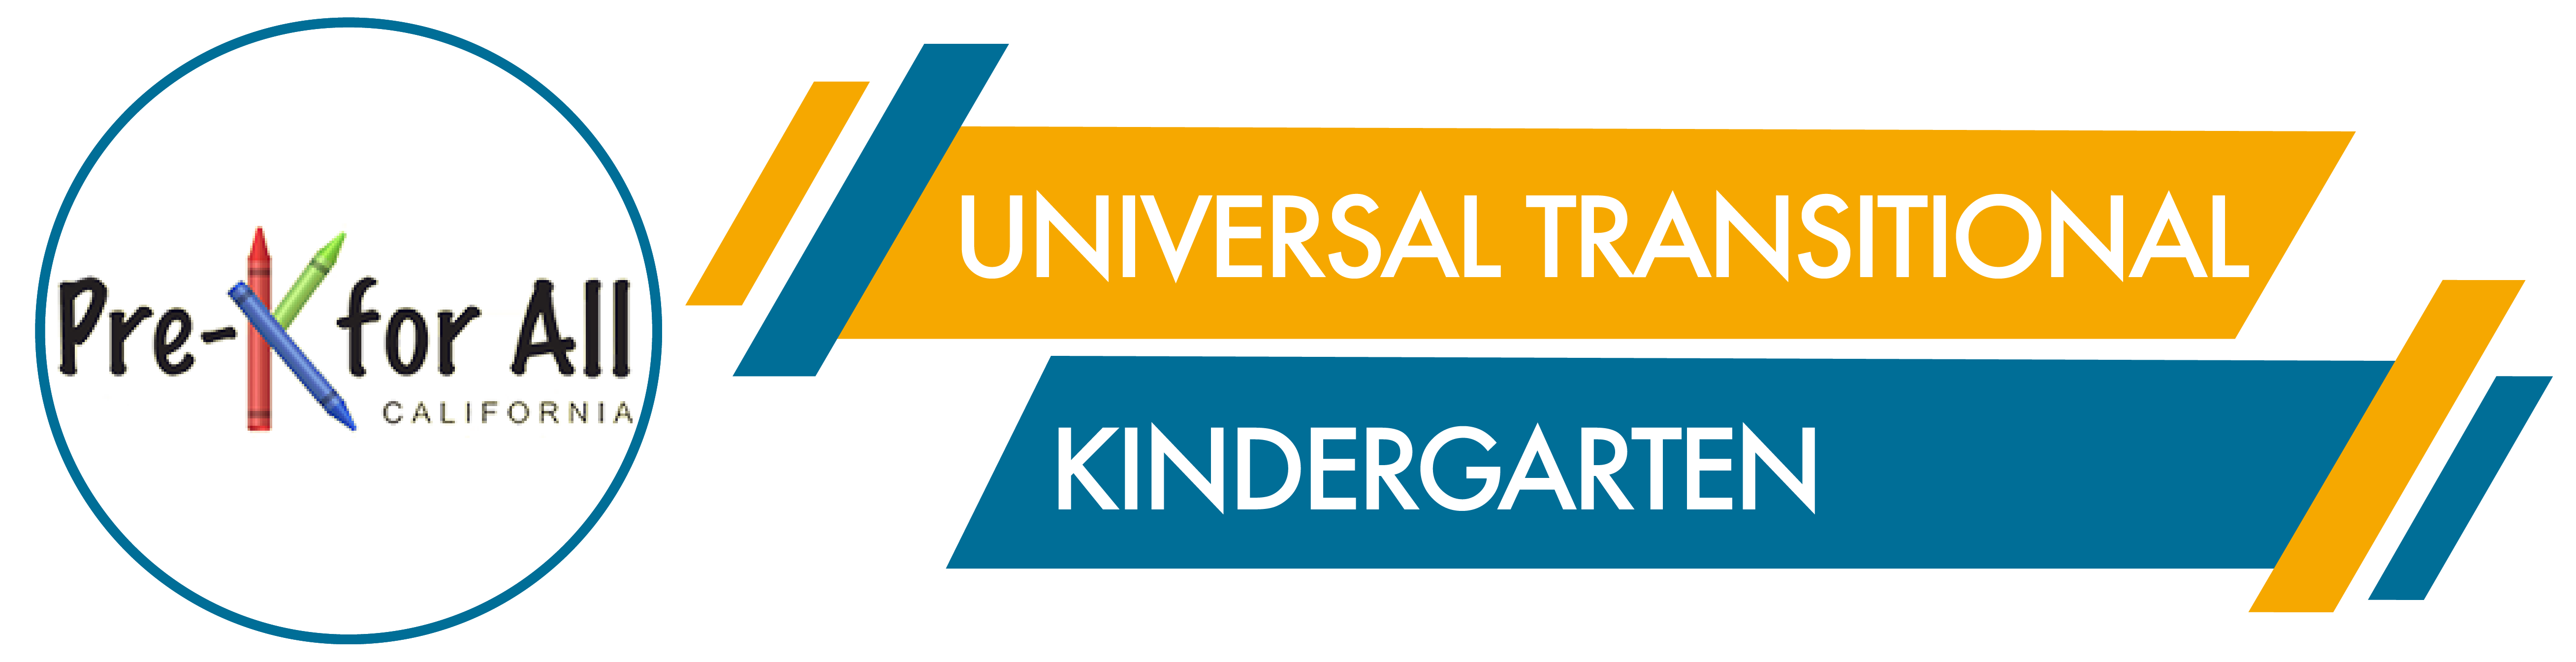 Universal Transitional Kindergarten Banner